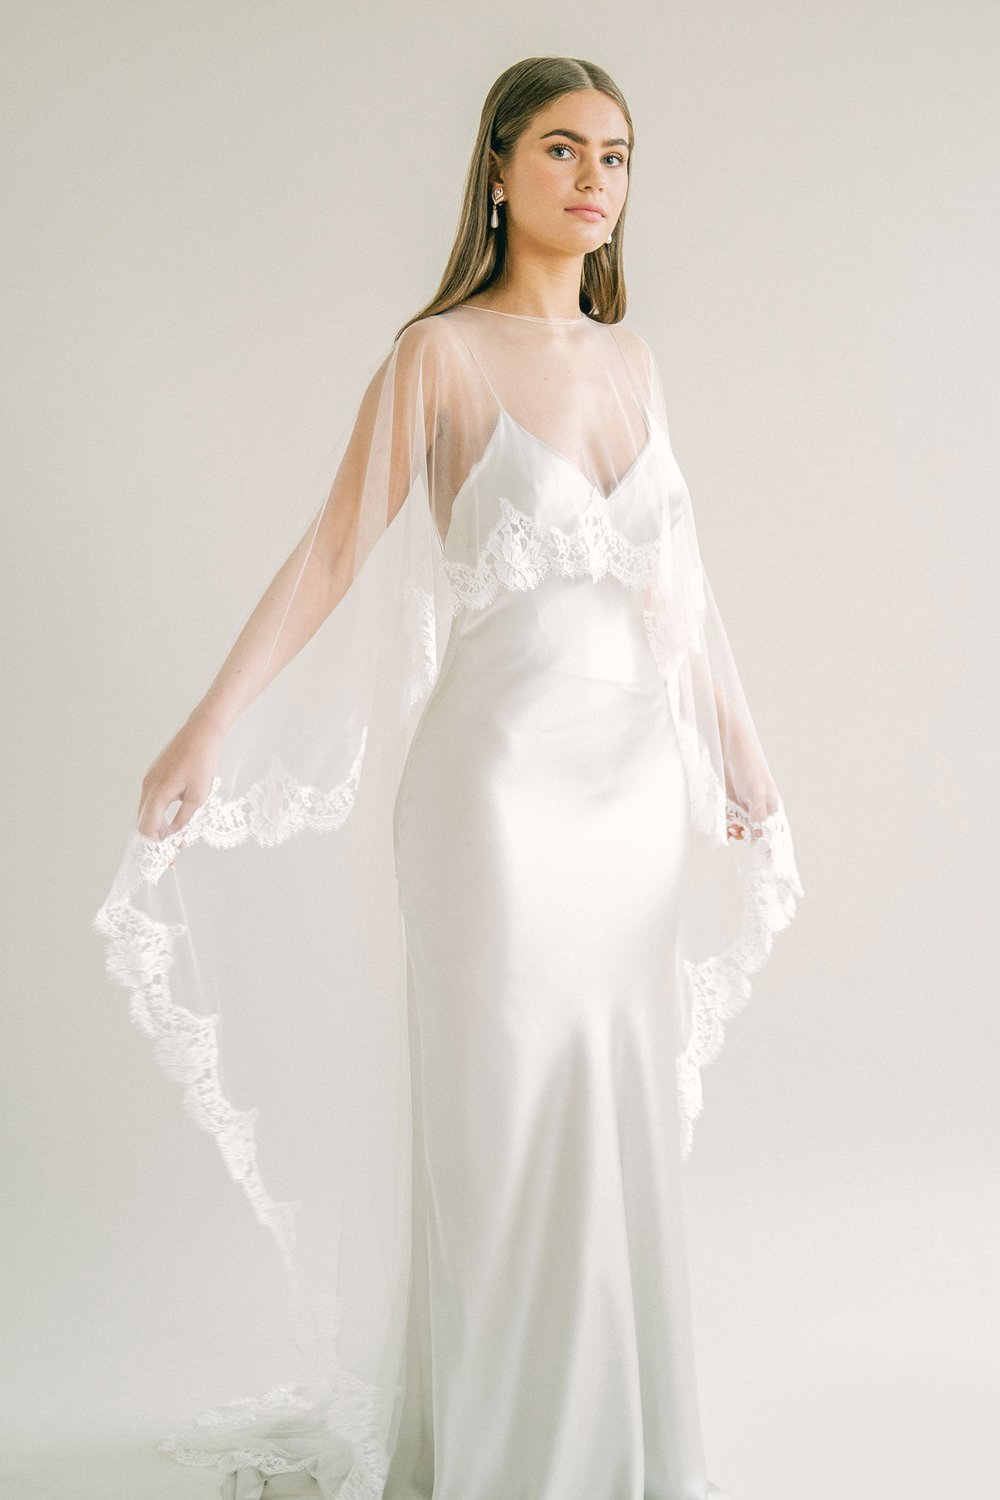 SomethingBlue-Kate-Beaumont-wedding-dresses-Emma-Pilkington-Photography-15.jpg